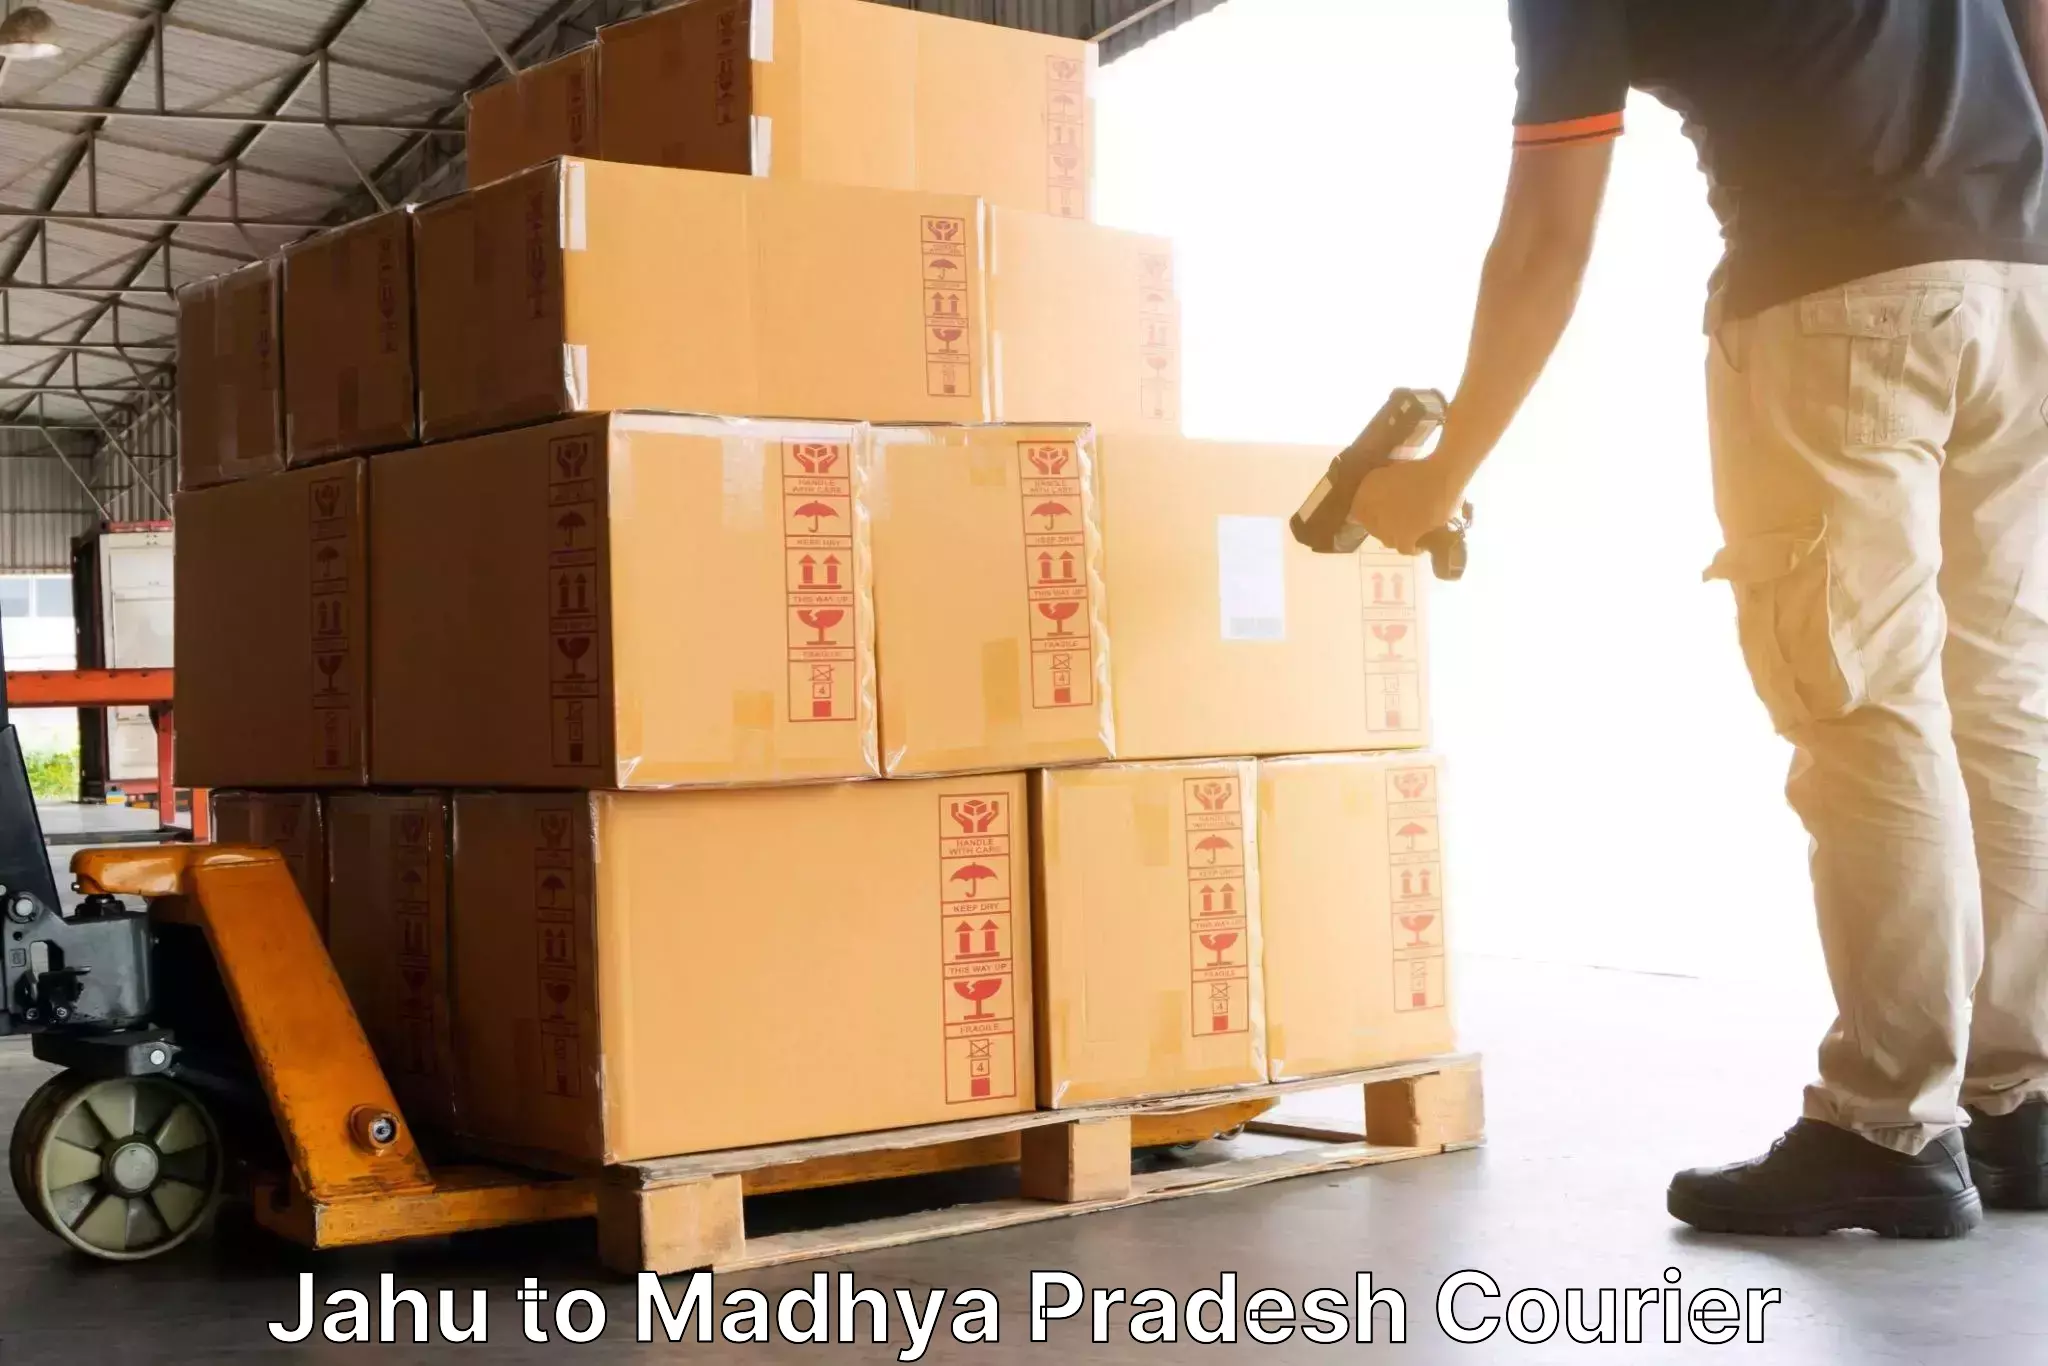 High-speed parcel service Jahu to Kotma